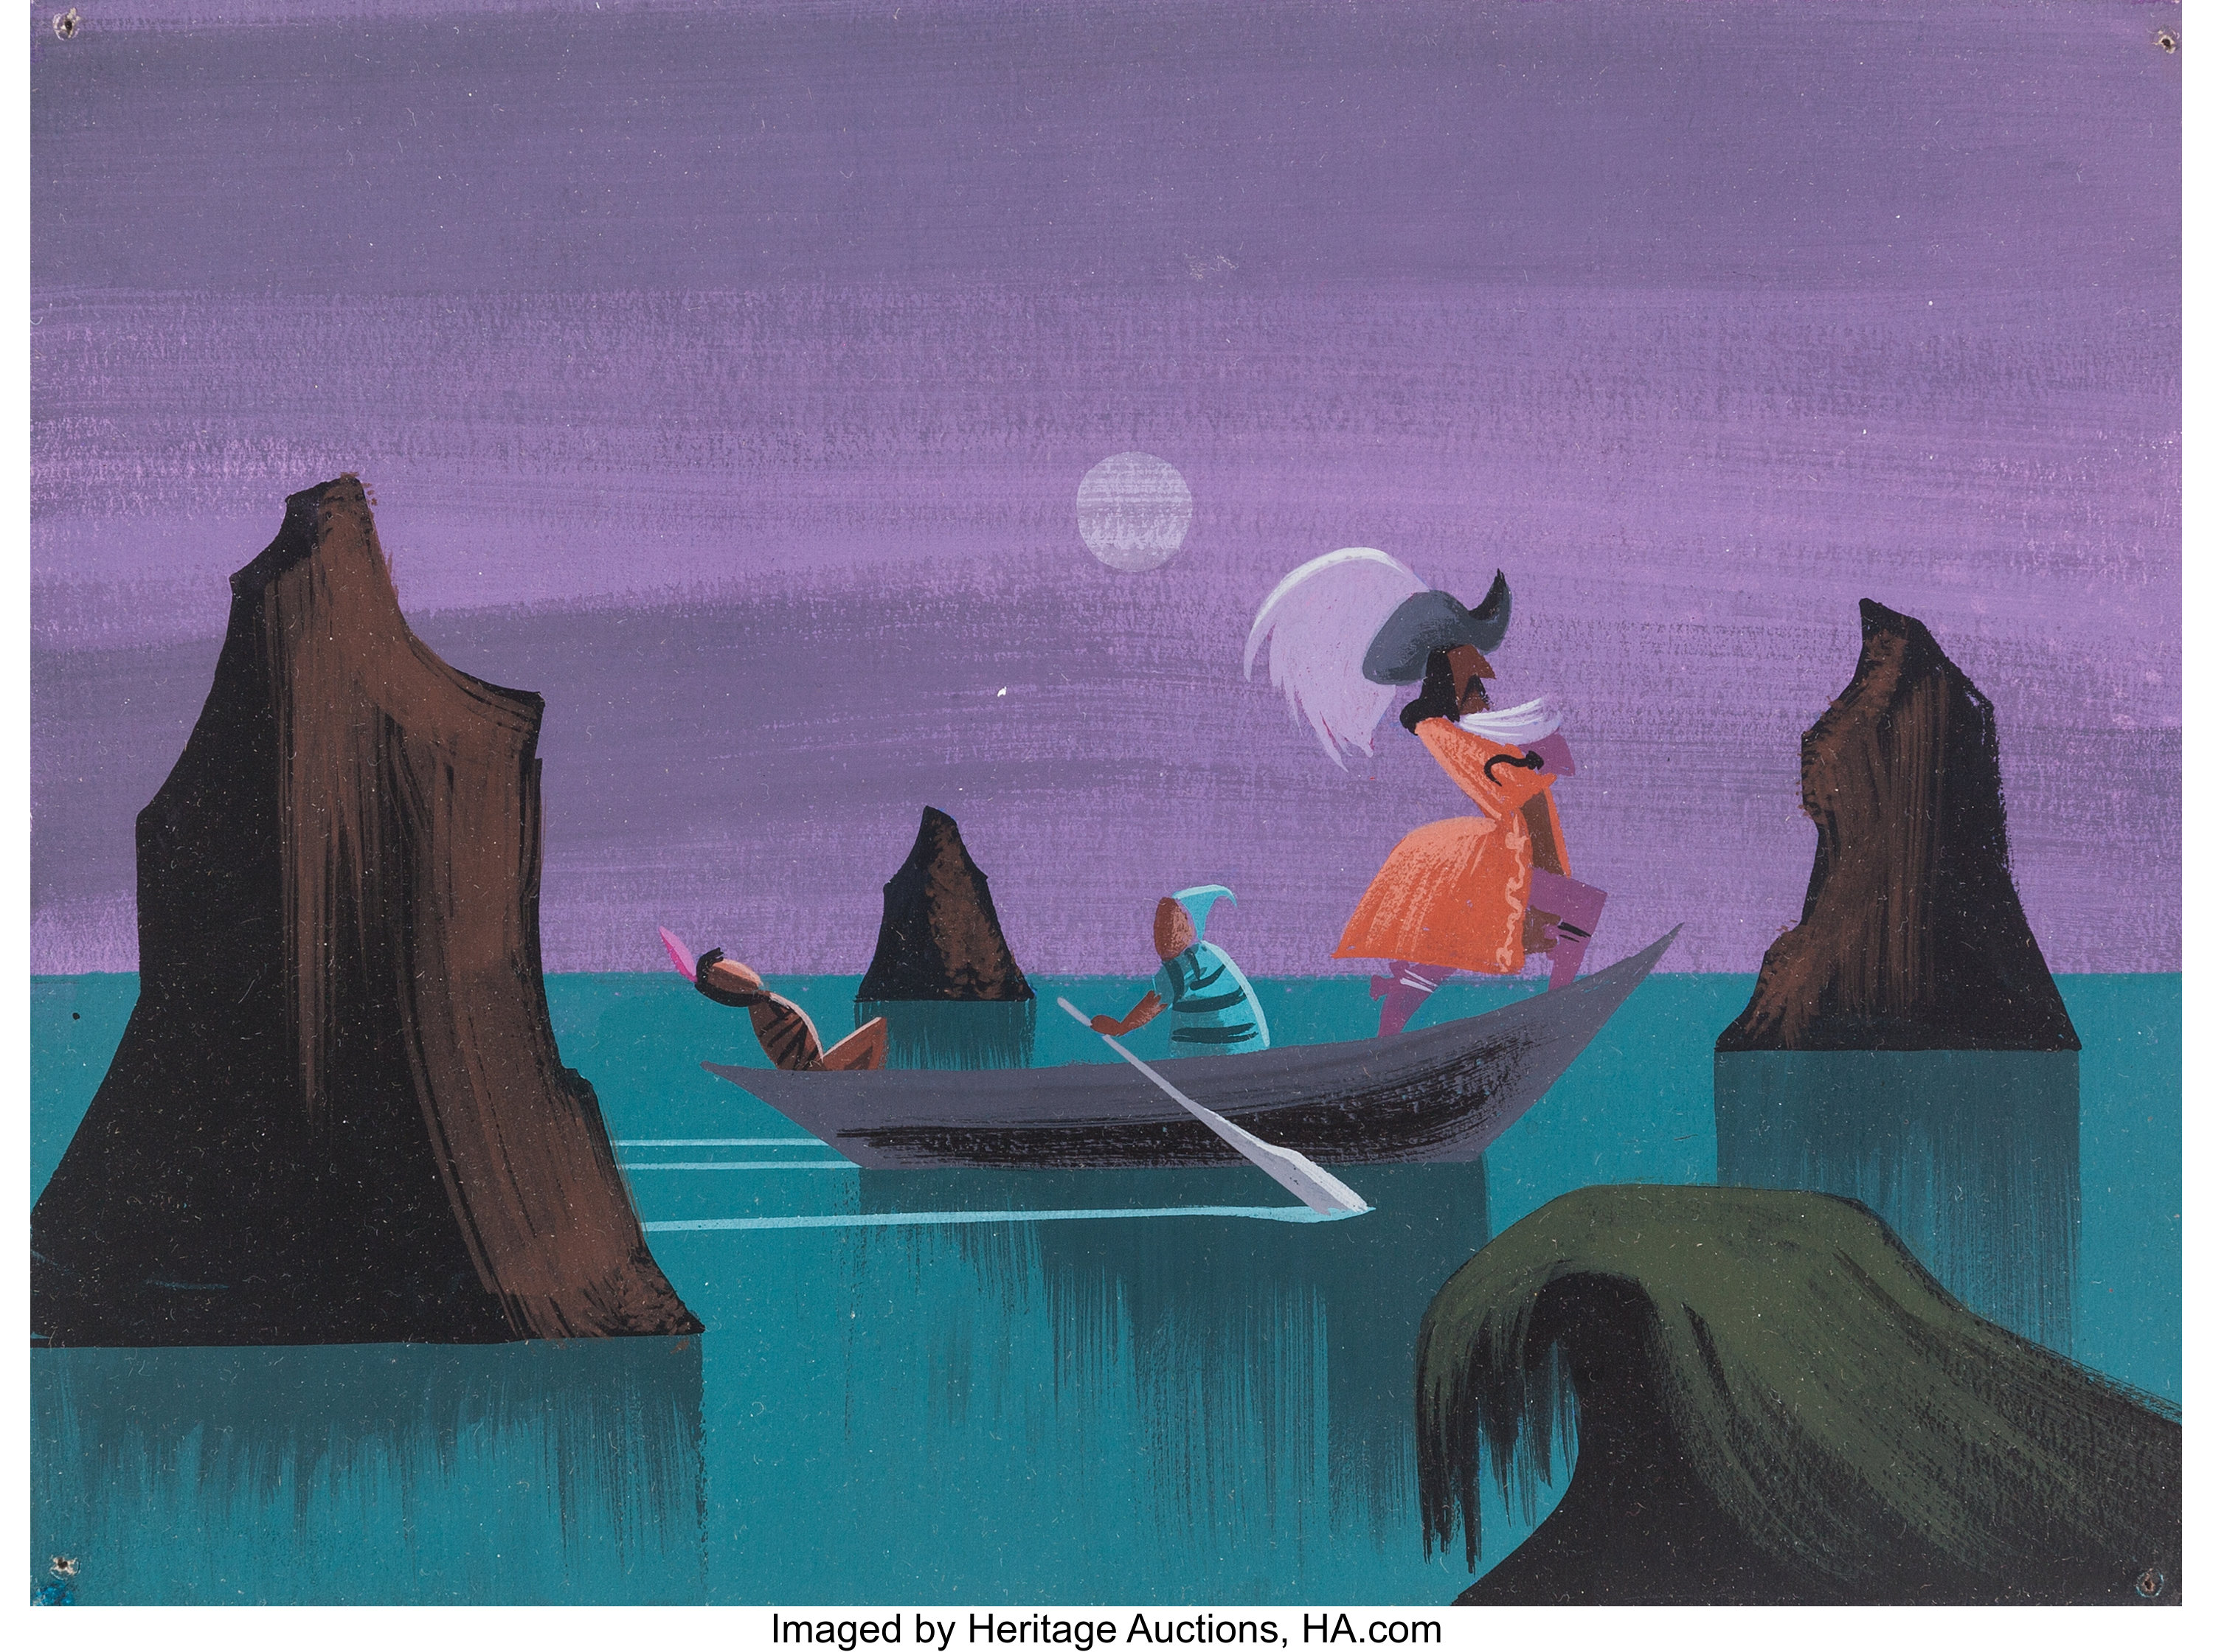 Sold at Auction: Walt Disney Classics Figure Captain Hook, Peter Pan